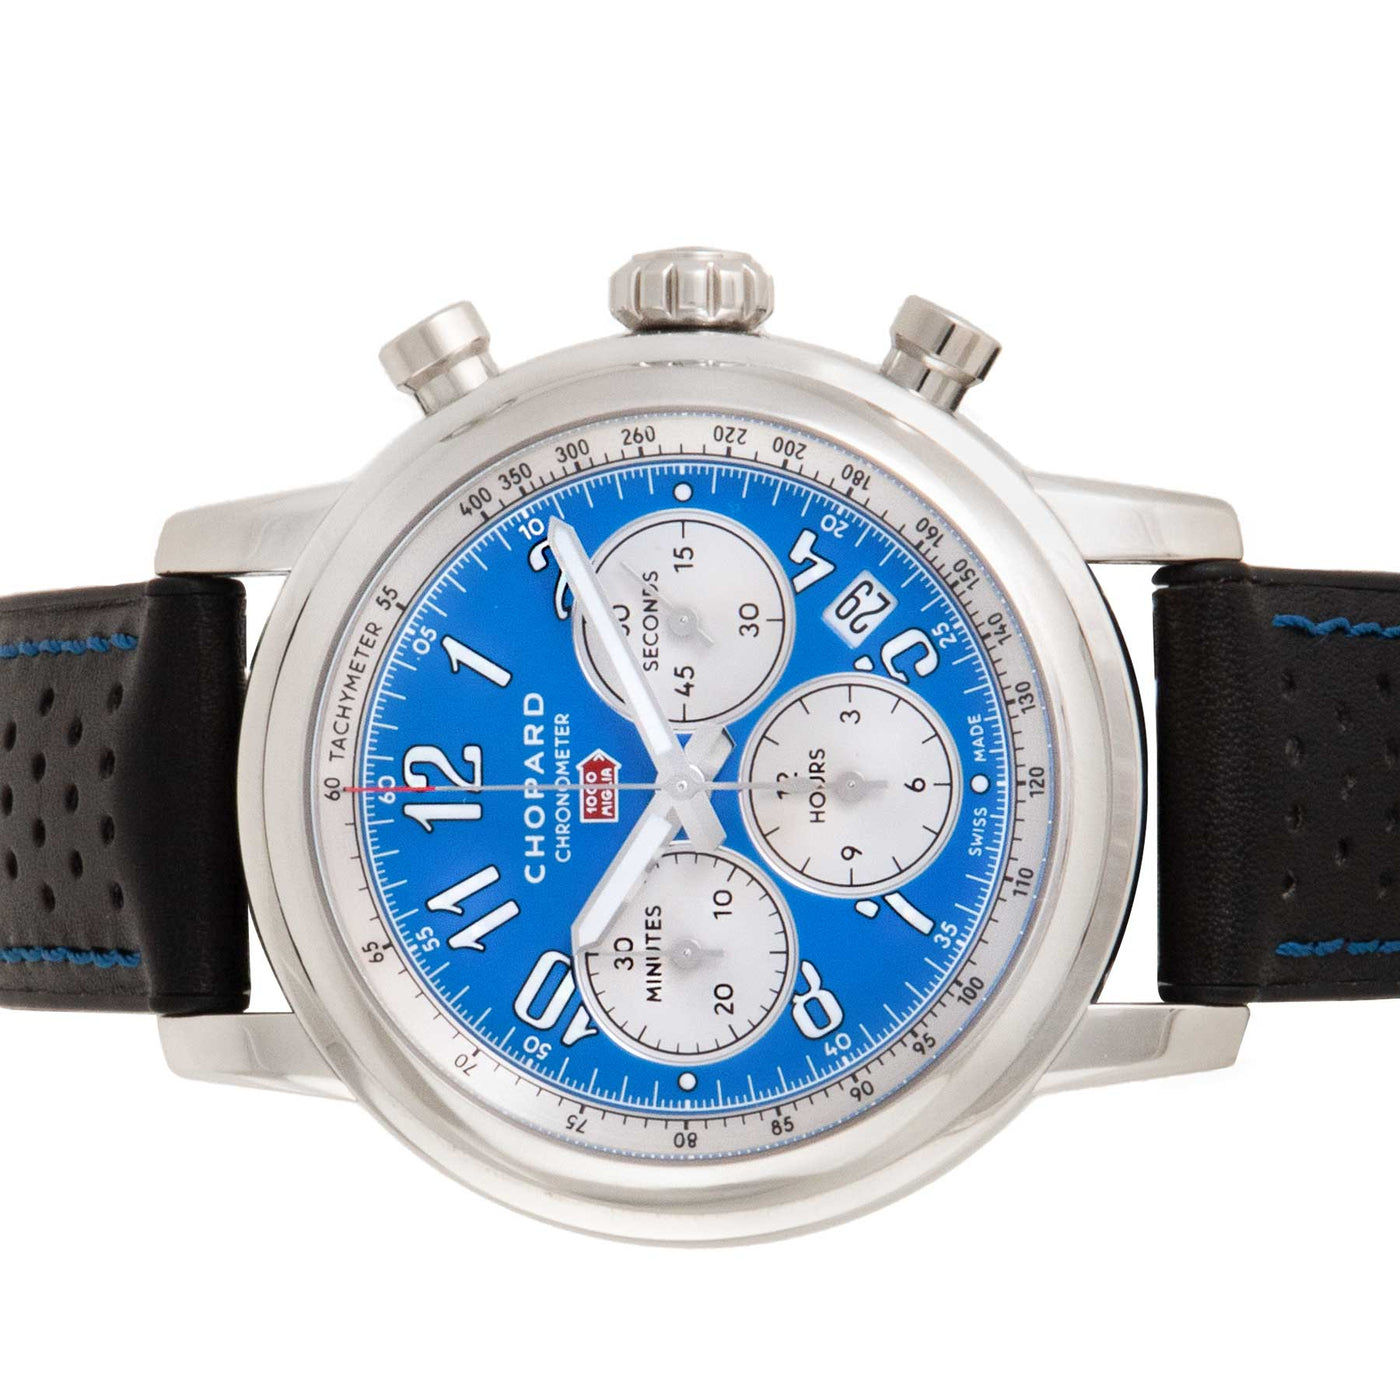 Chopard Mille Miglia Chronograph 168589-3010 | Timepiece360